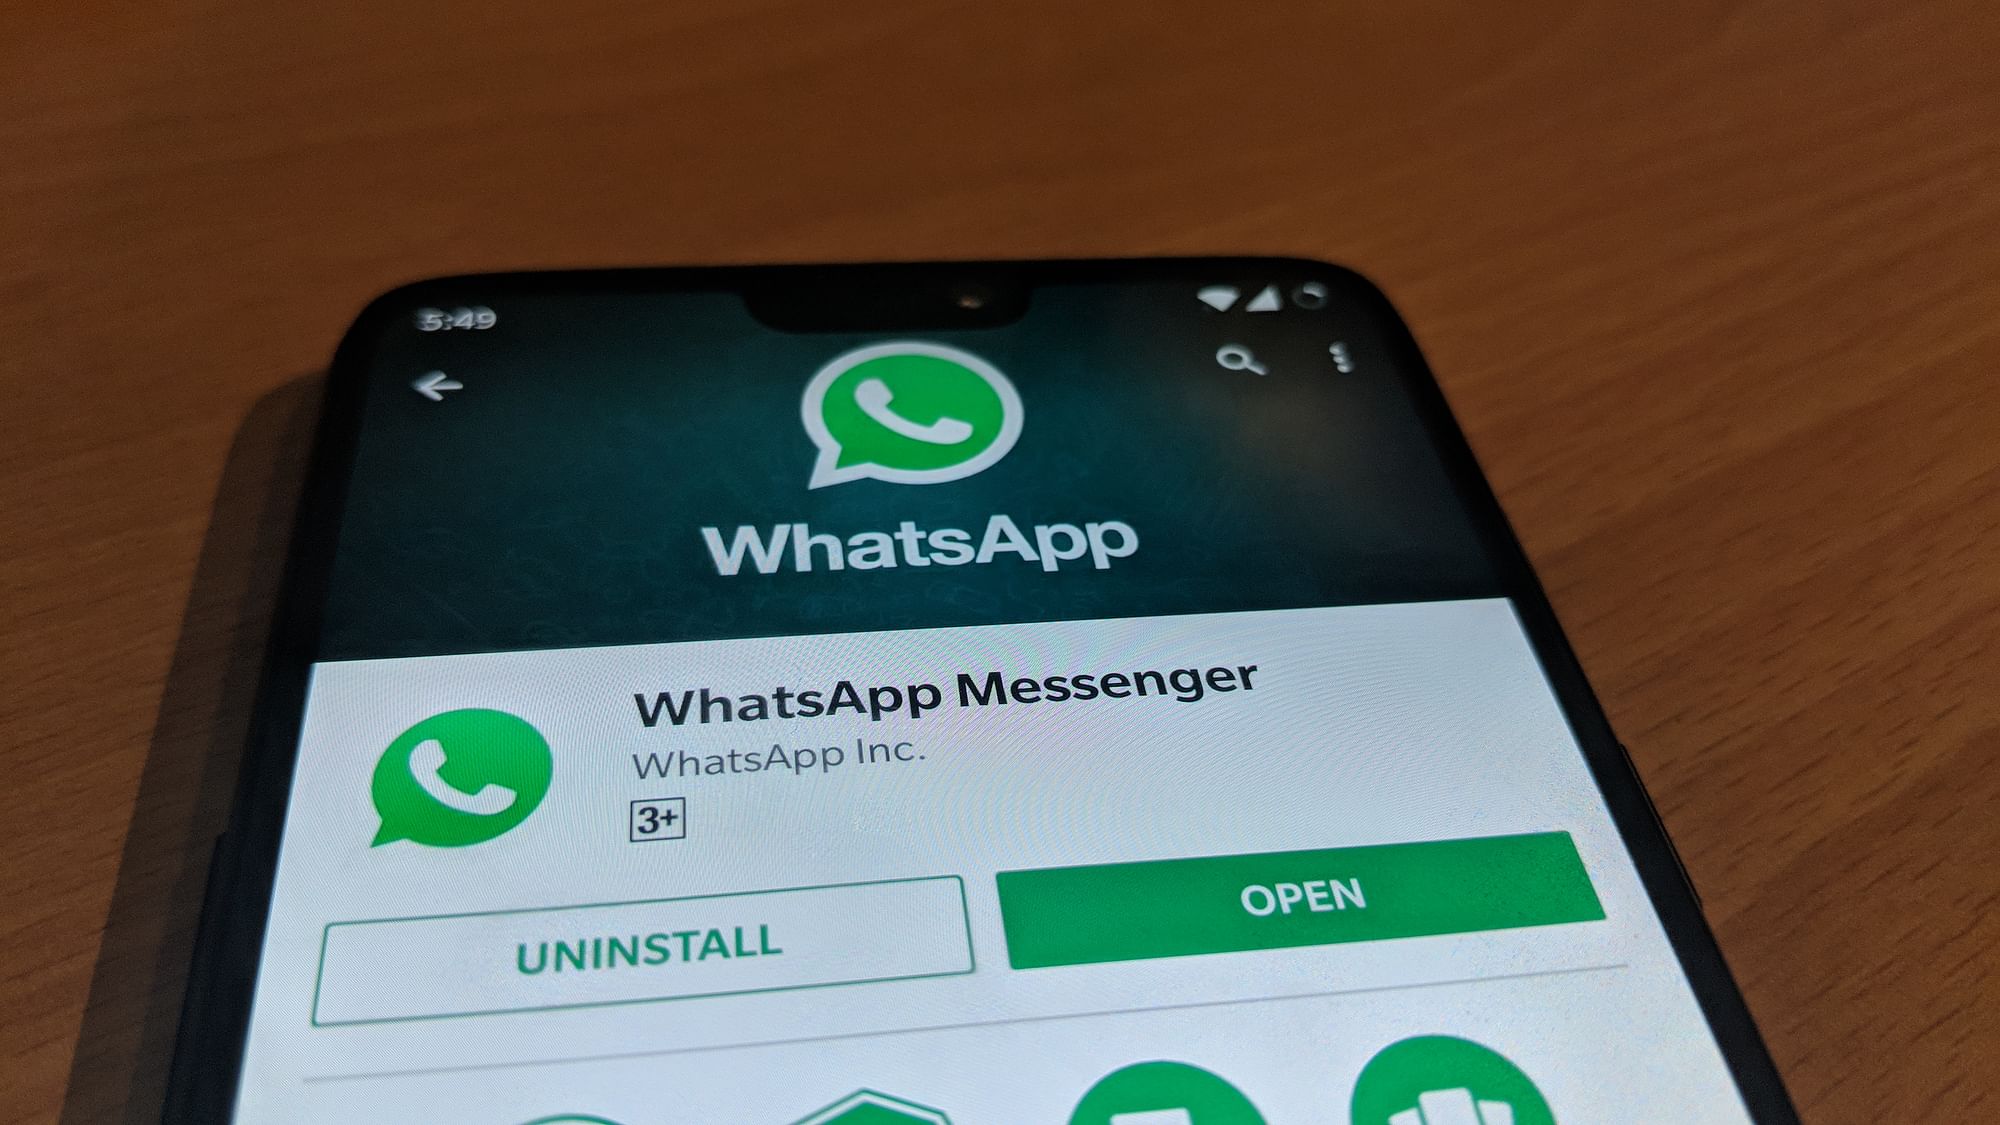 WhatsApp says more than 2.5 billion use the app.